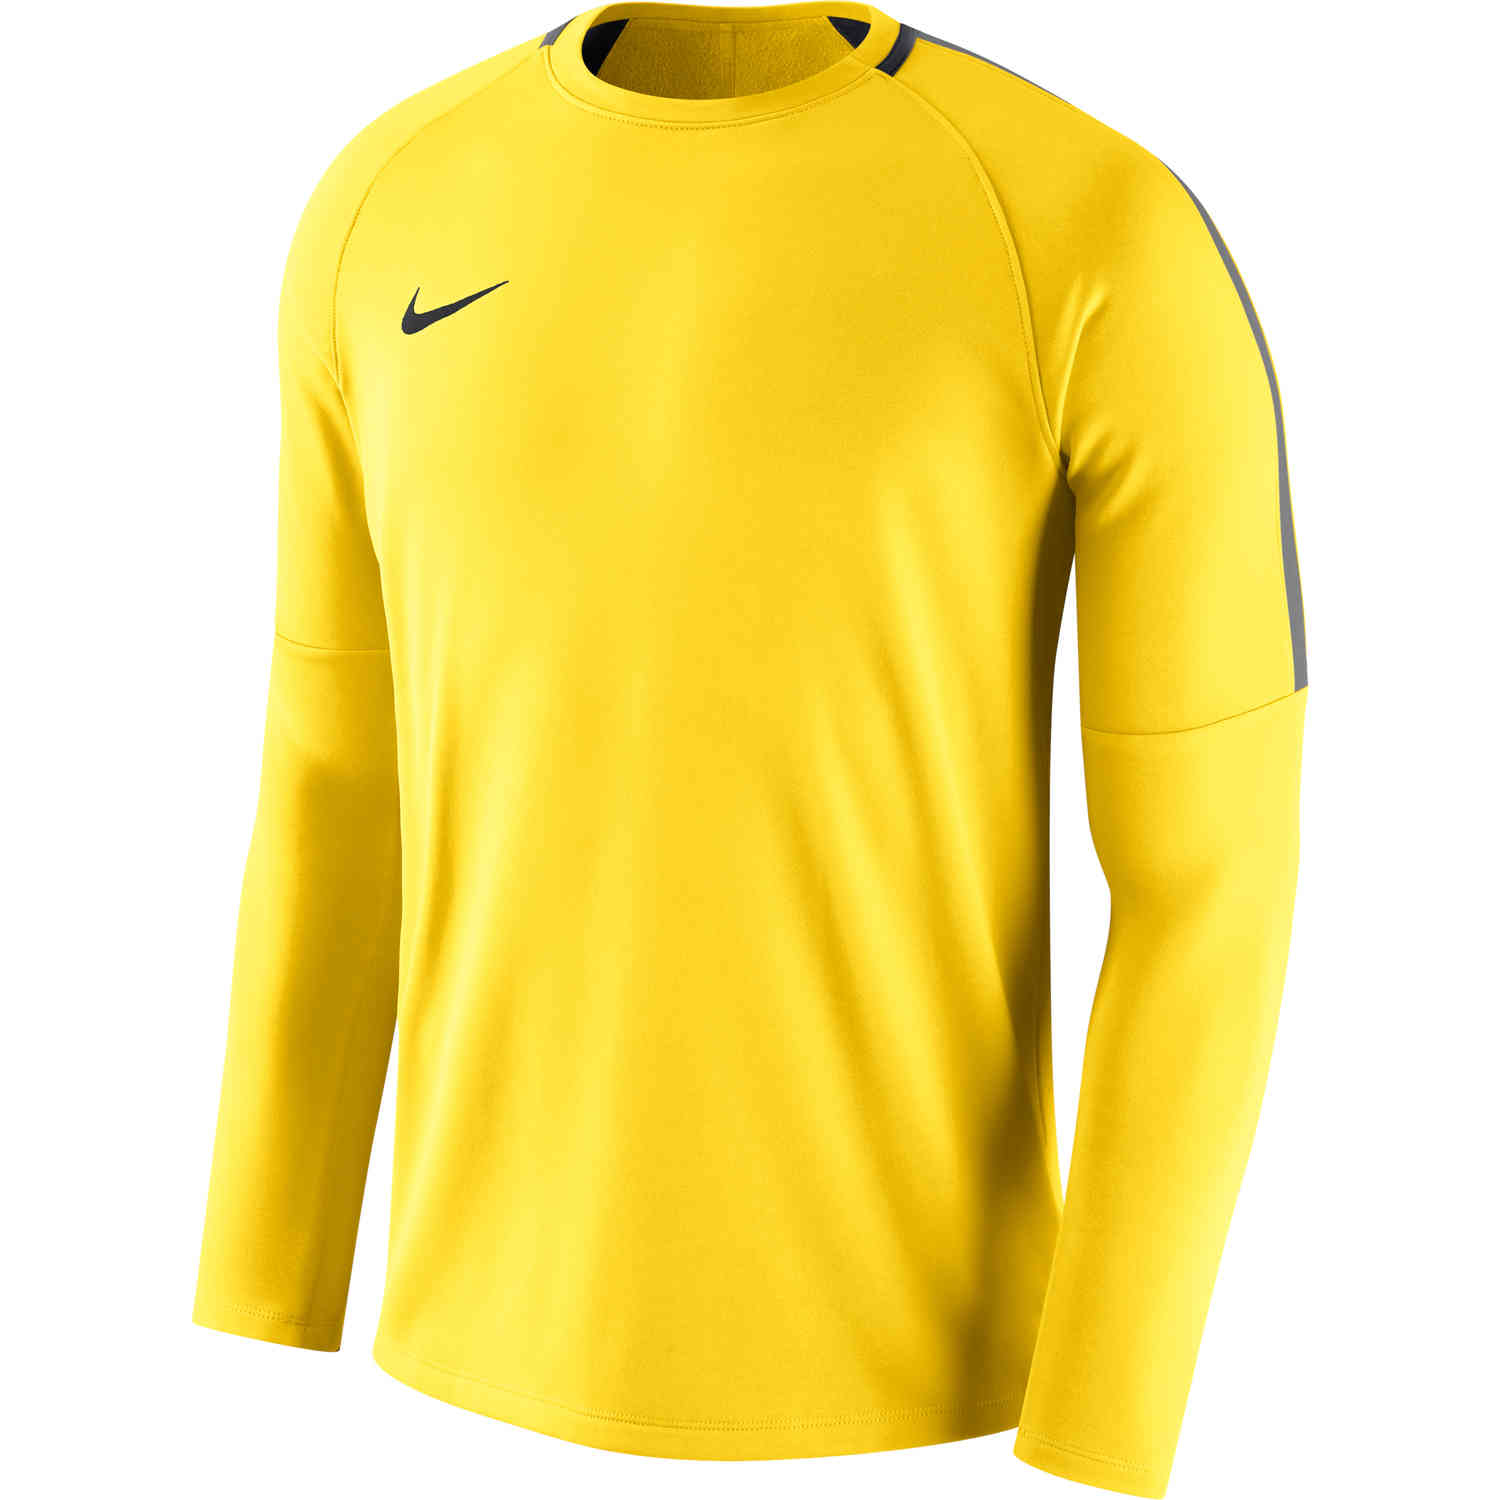 Nike Academy18 Crew - Tour Yellow - SoccerPro